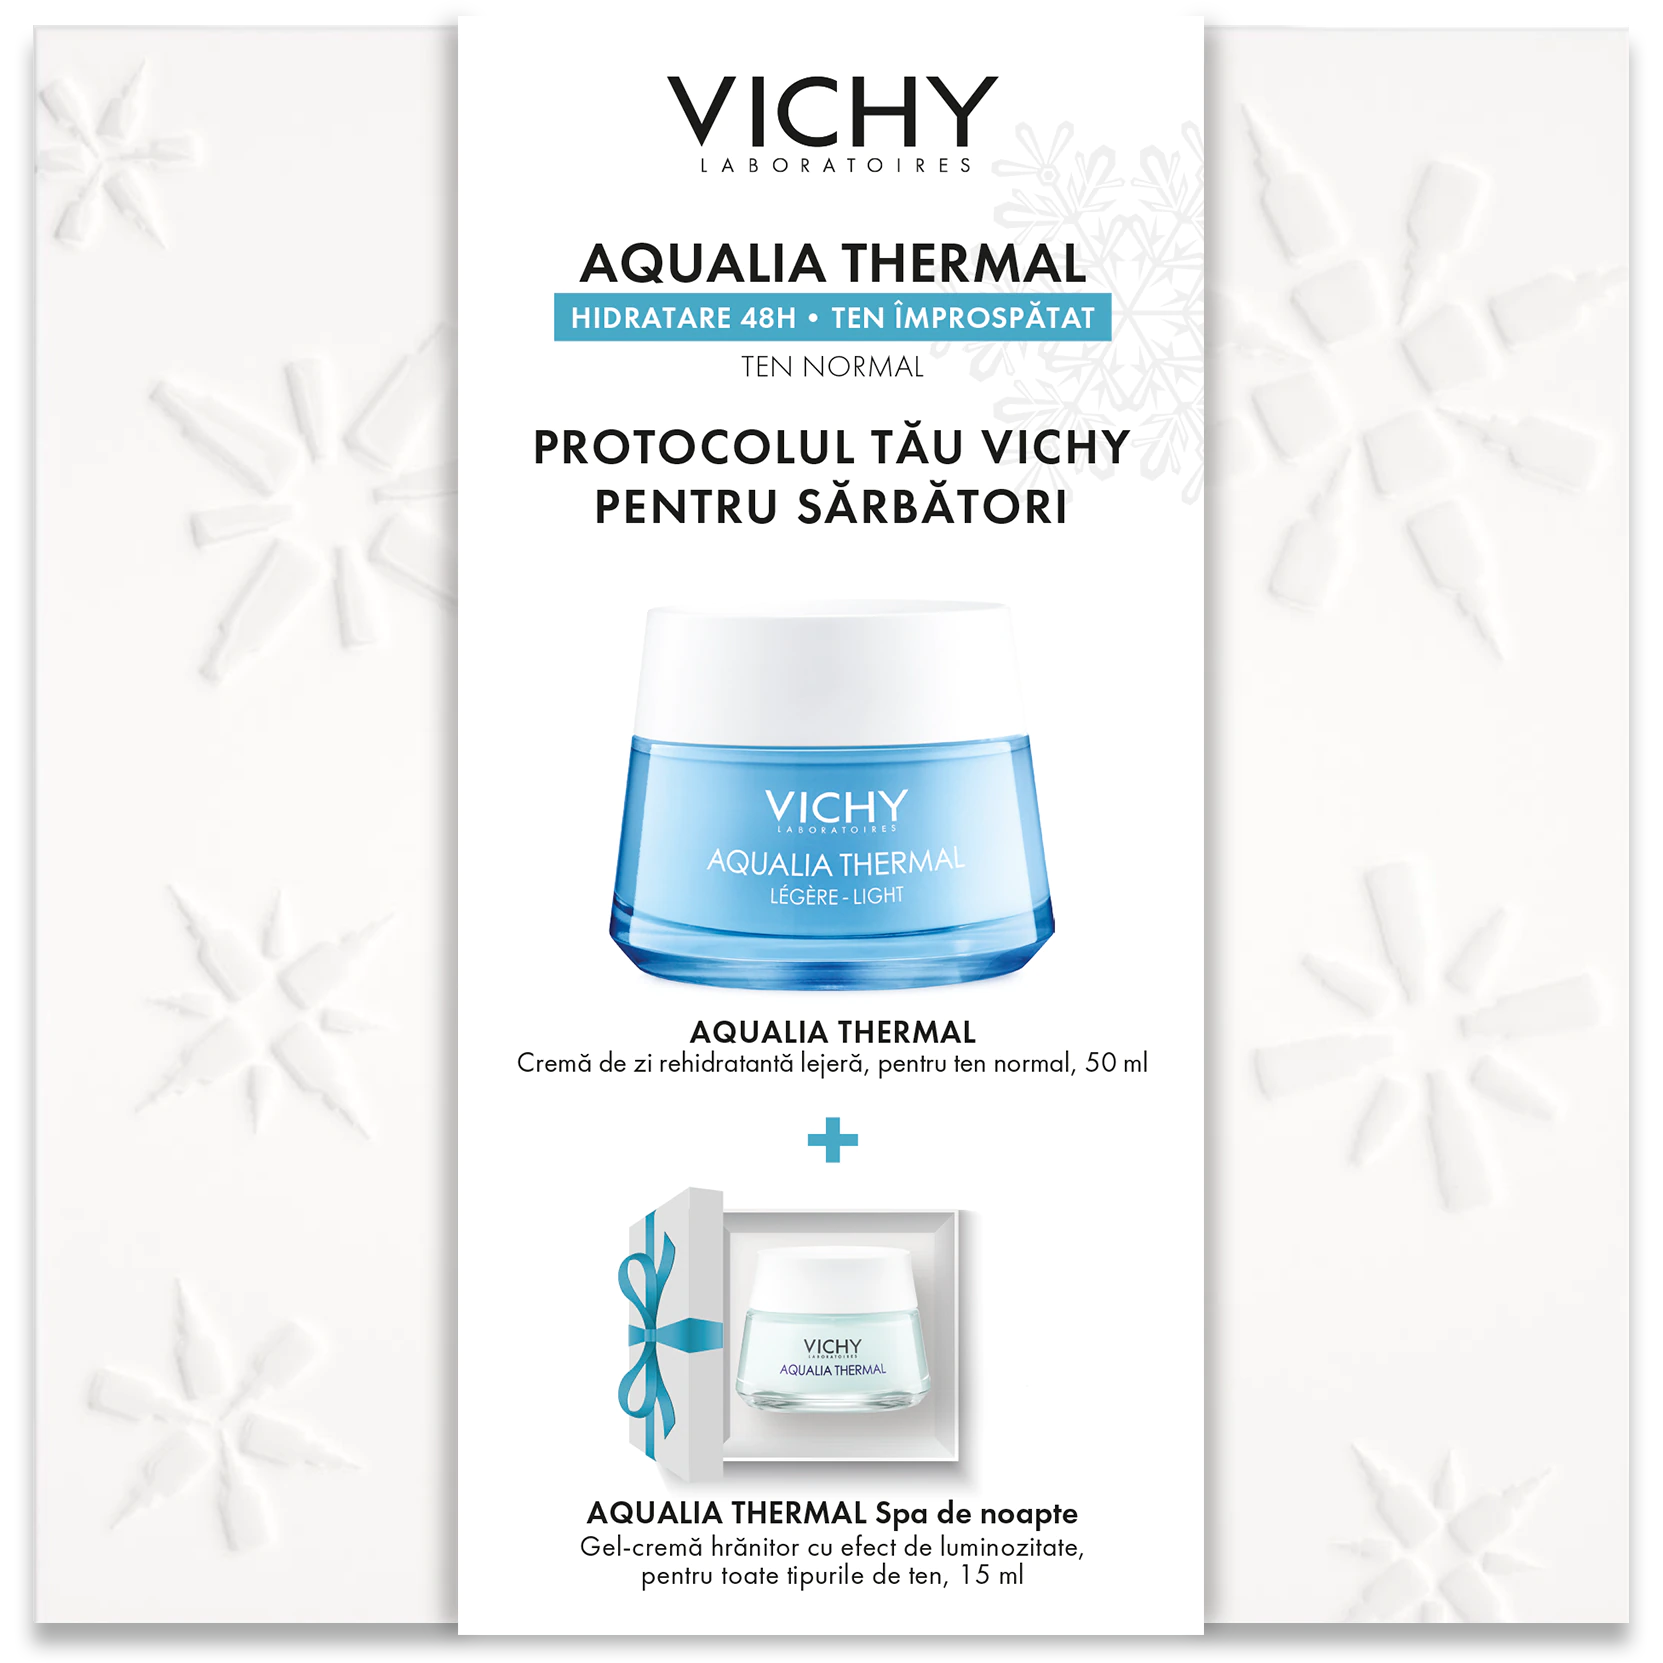 Creme si geluri de fata - Pache Promotional Vichy Aqualia thermal crema de zi ten normal 50ml + spa de noapte 15ml, sinapis.ro